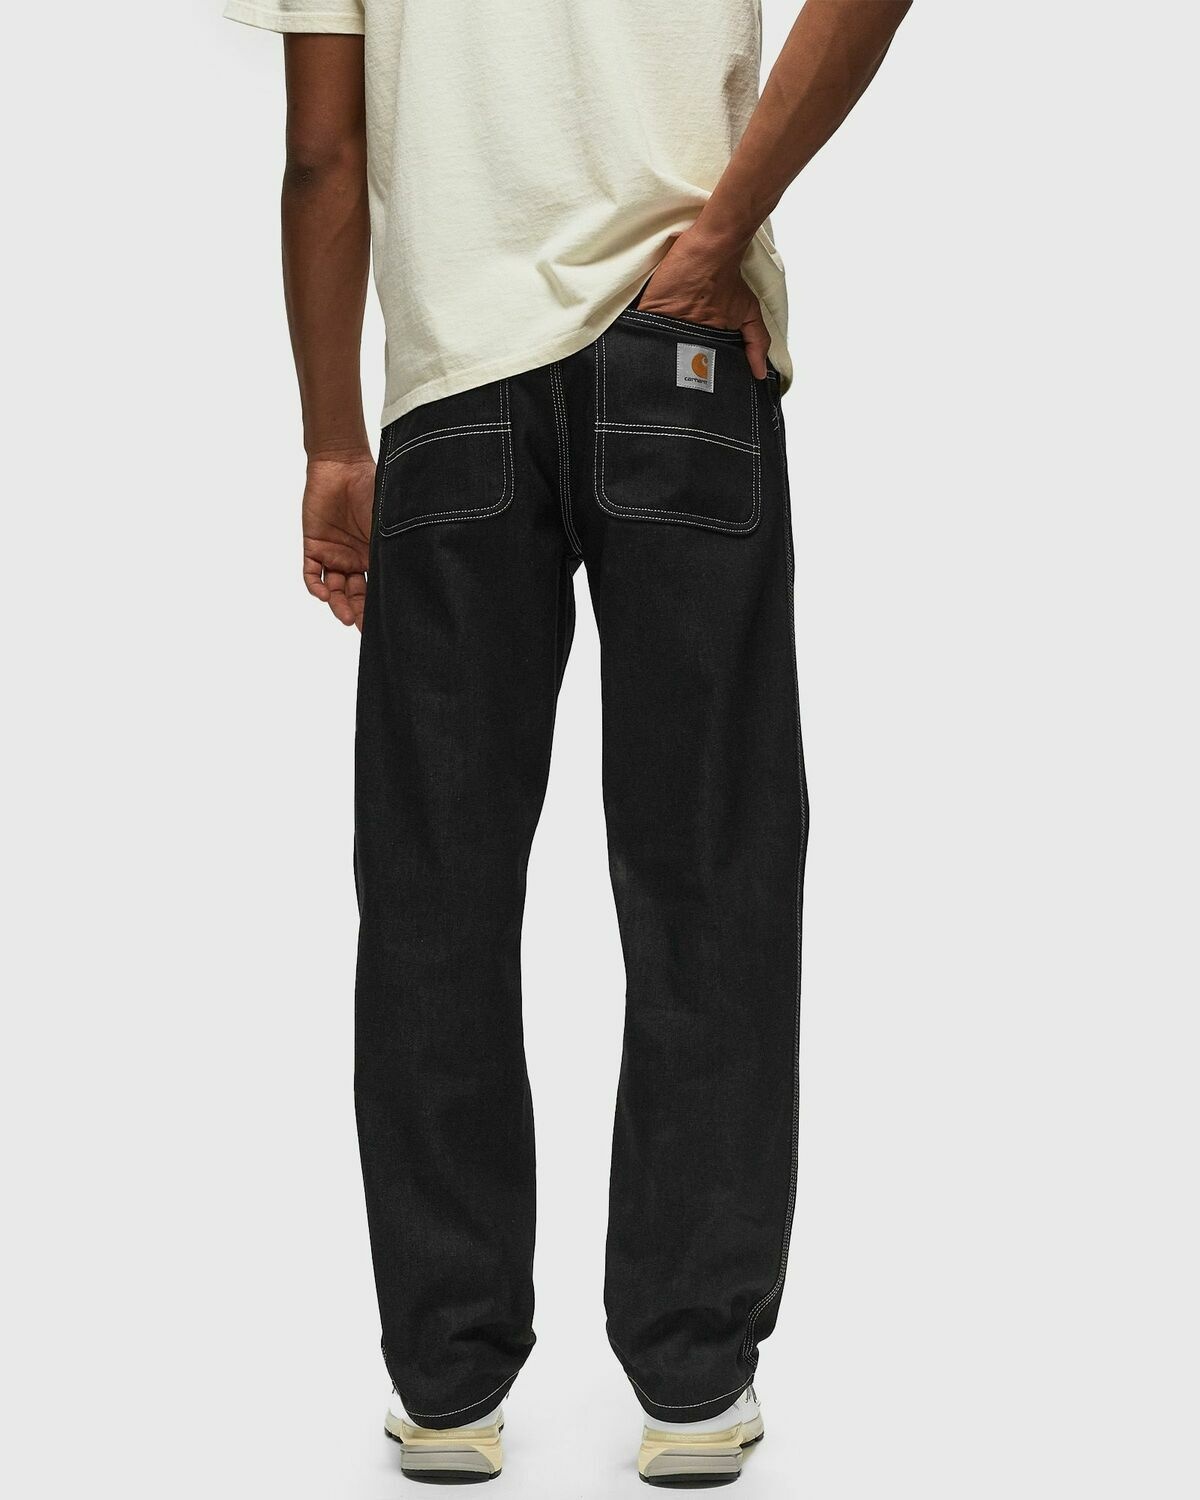 Carhartt Wip Simple Pant Black - Mens - Jeans Carhartt WIP